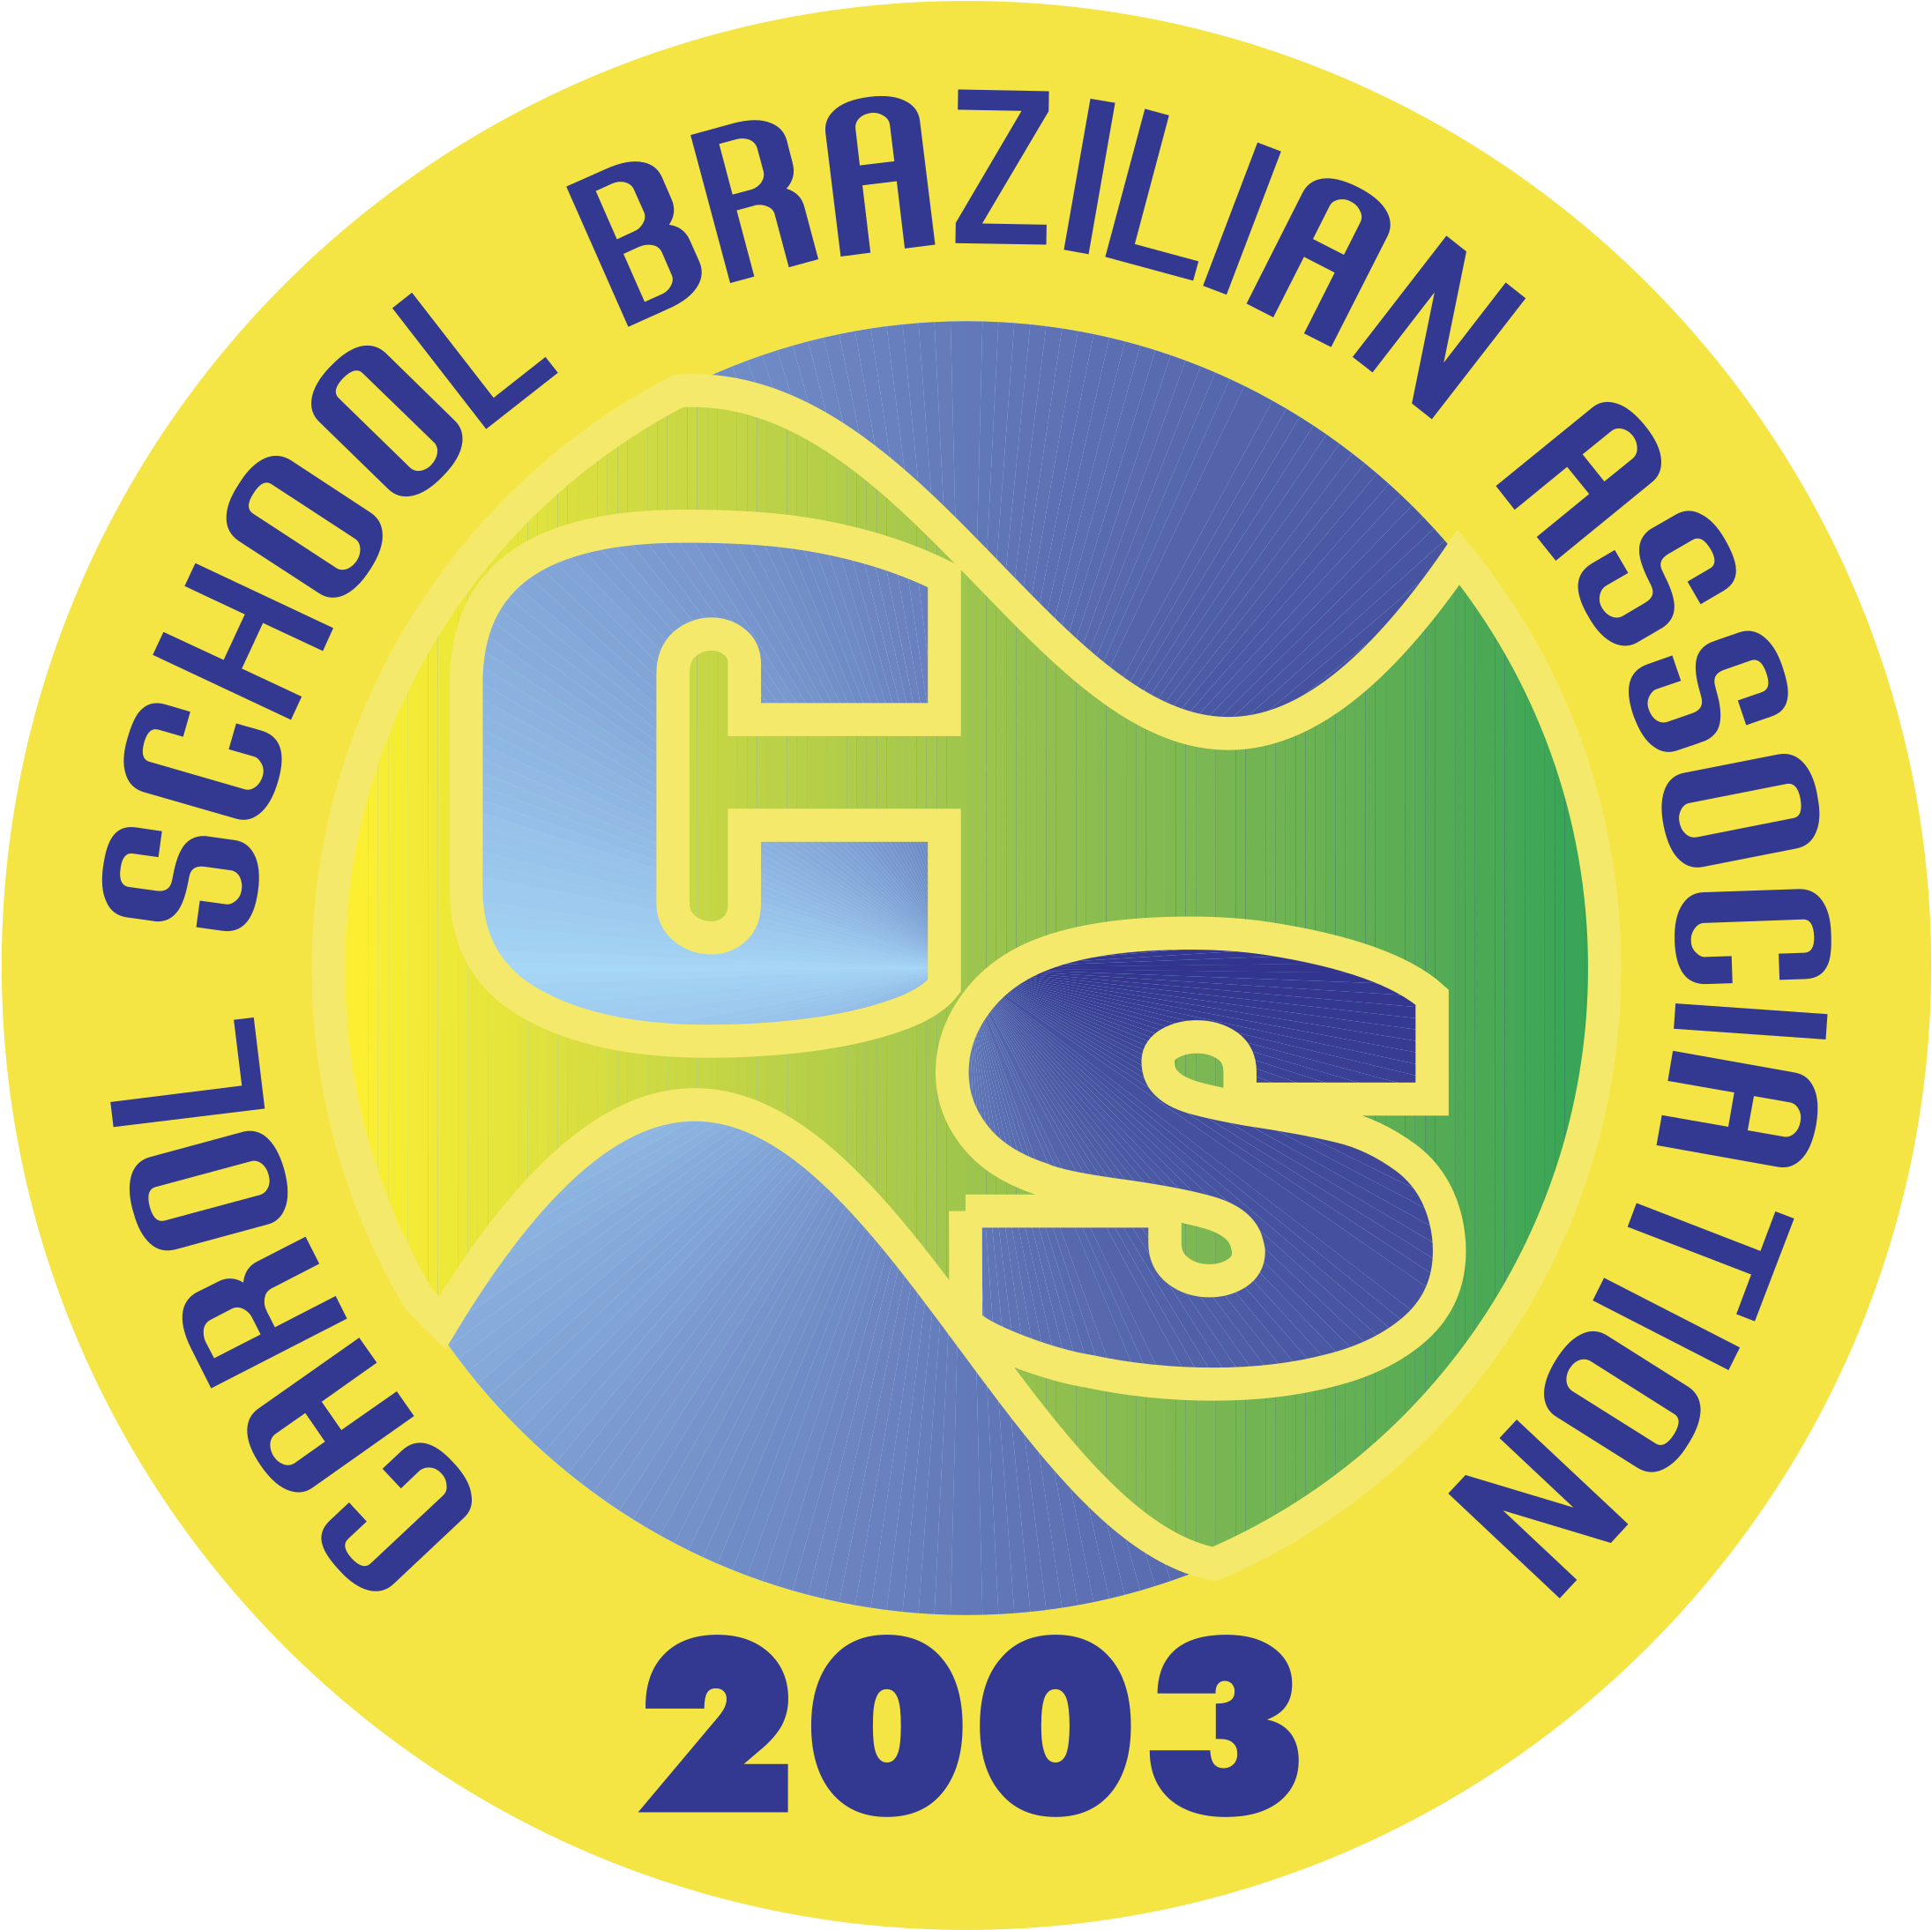 Carol School Logo Png Transparent - Free Download (2400x2400)